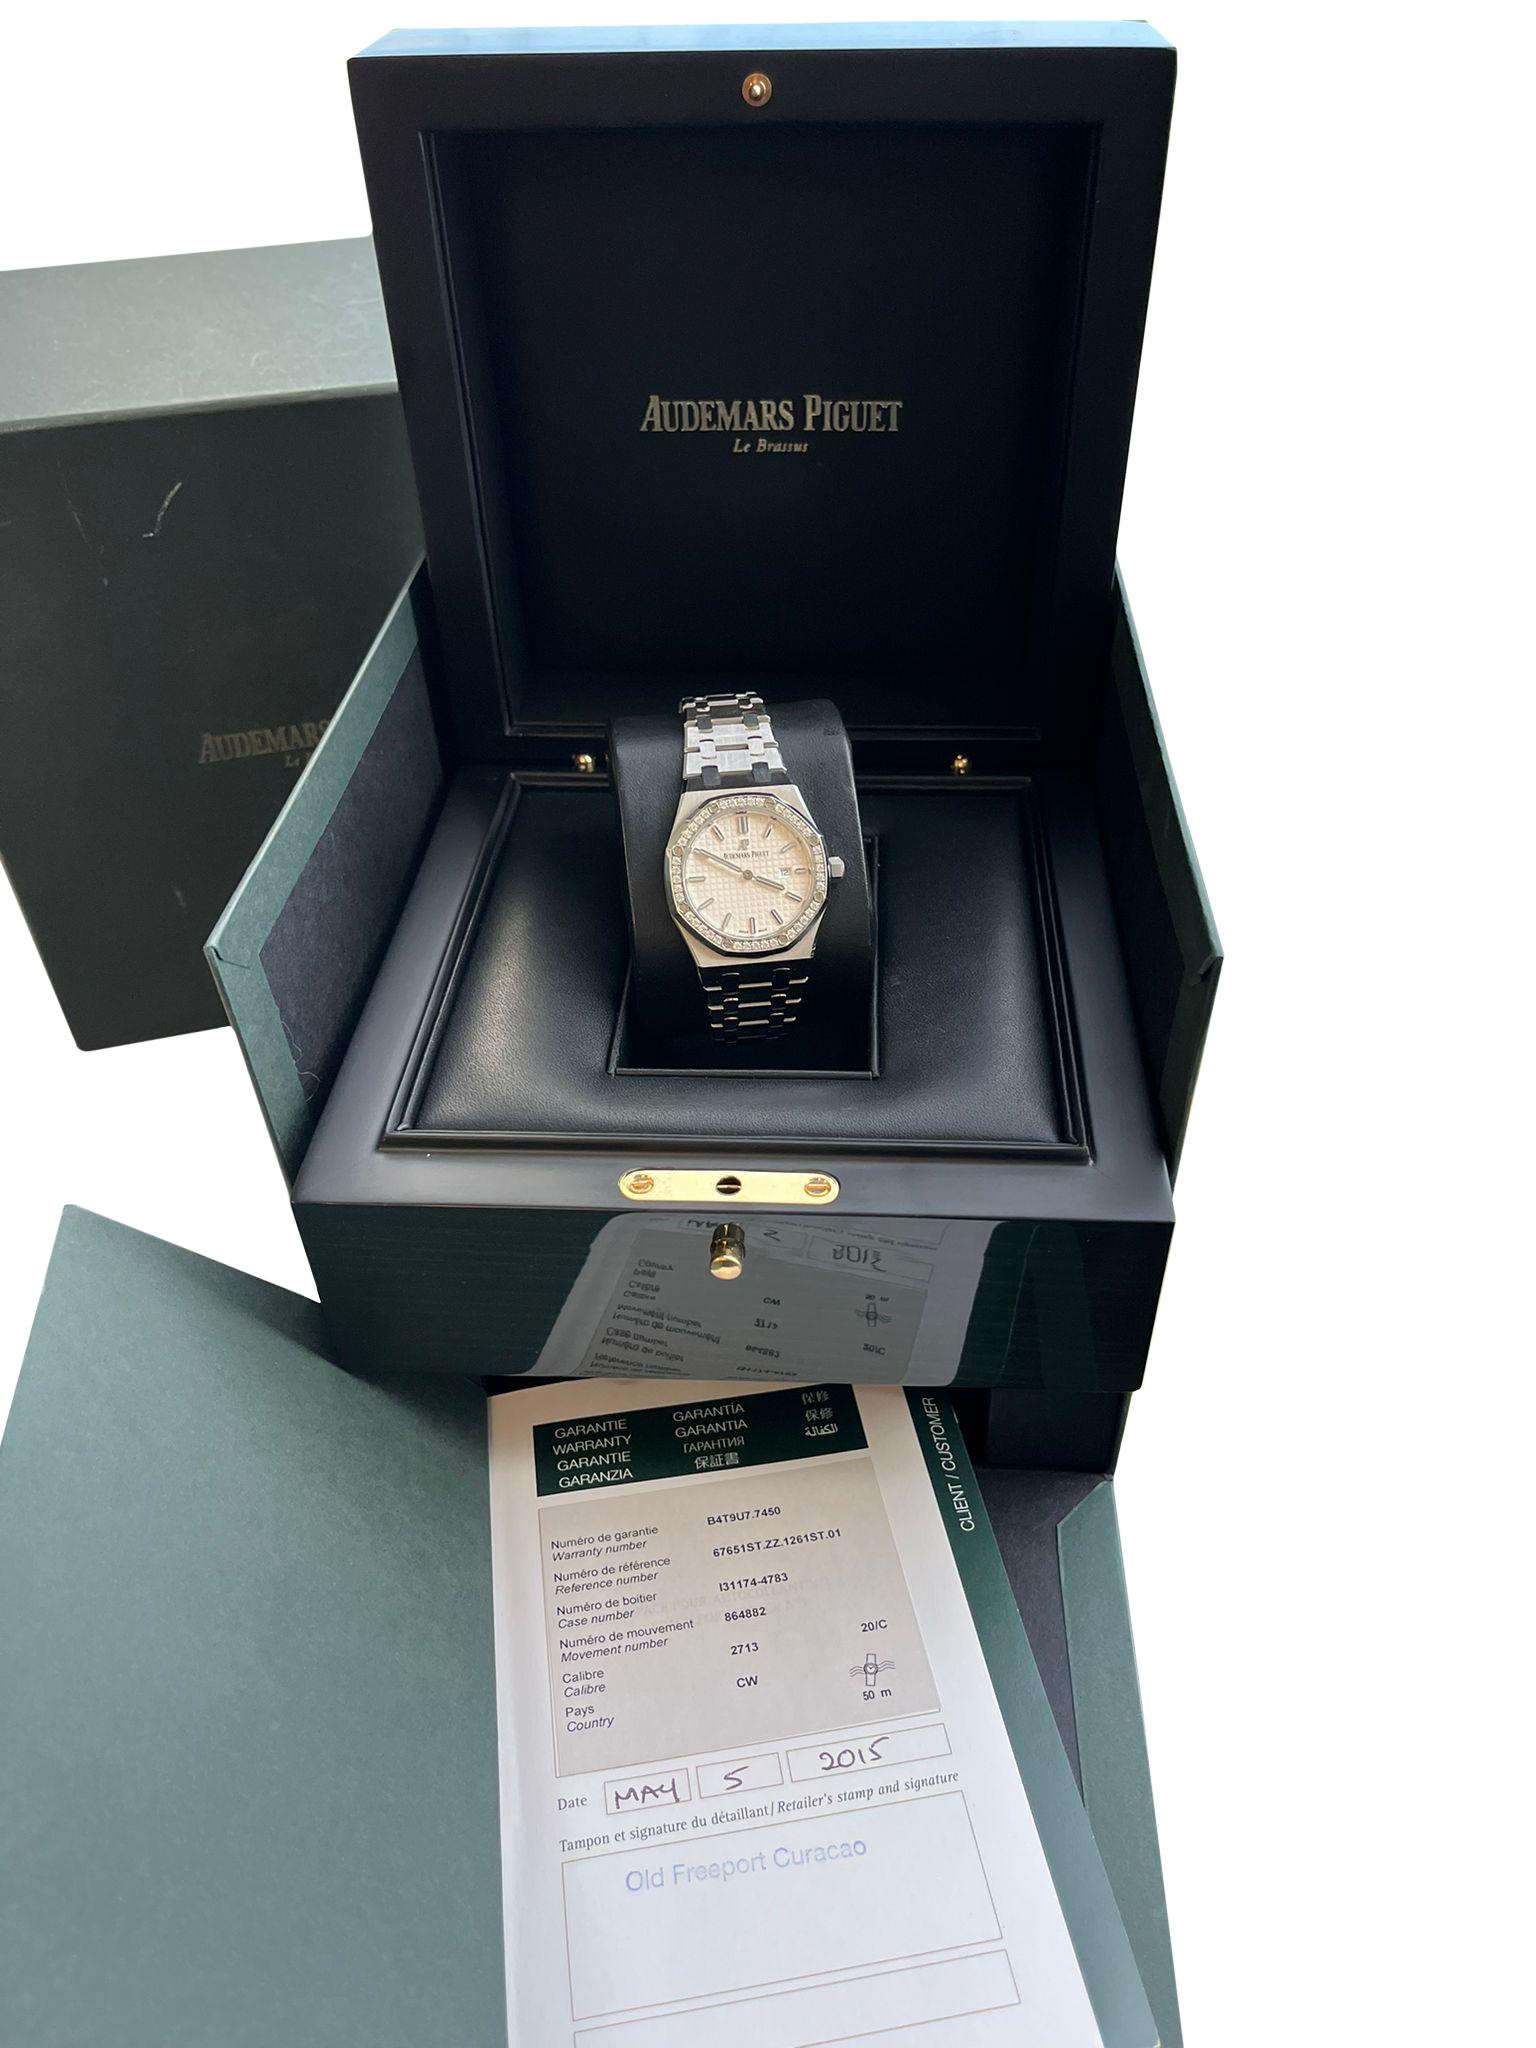 Audemars Piguet Royal Oak Quartz Lady watch. with date display. Stainless steel case, silvered dial, stainless steel bracelet. 40 brilliant-cut diamonds (bezel). Stainless steel case, glare-proofed sapphire crystal, diamond-set bezel, Silver-toned